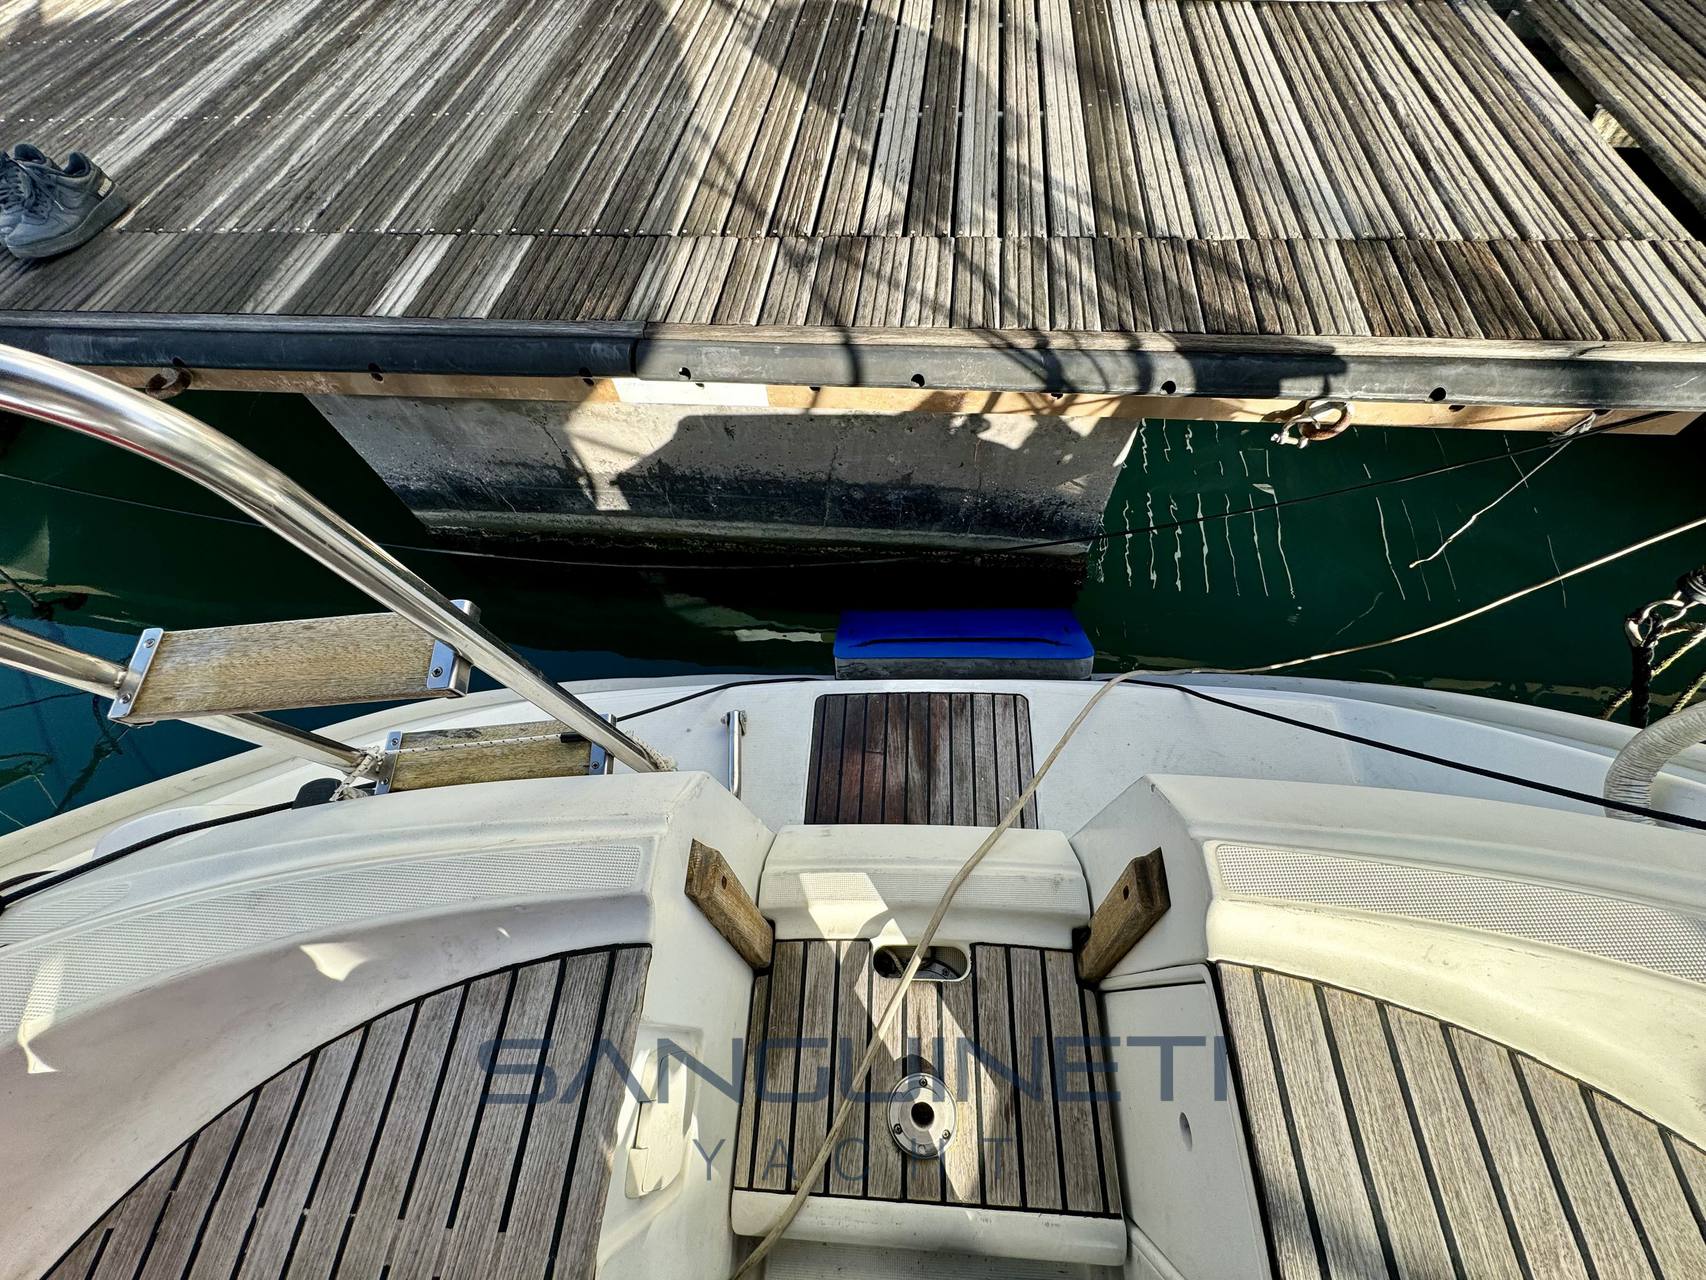 Jeanneau Sun odyssey 32.2 Barco de vela usado para venta